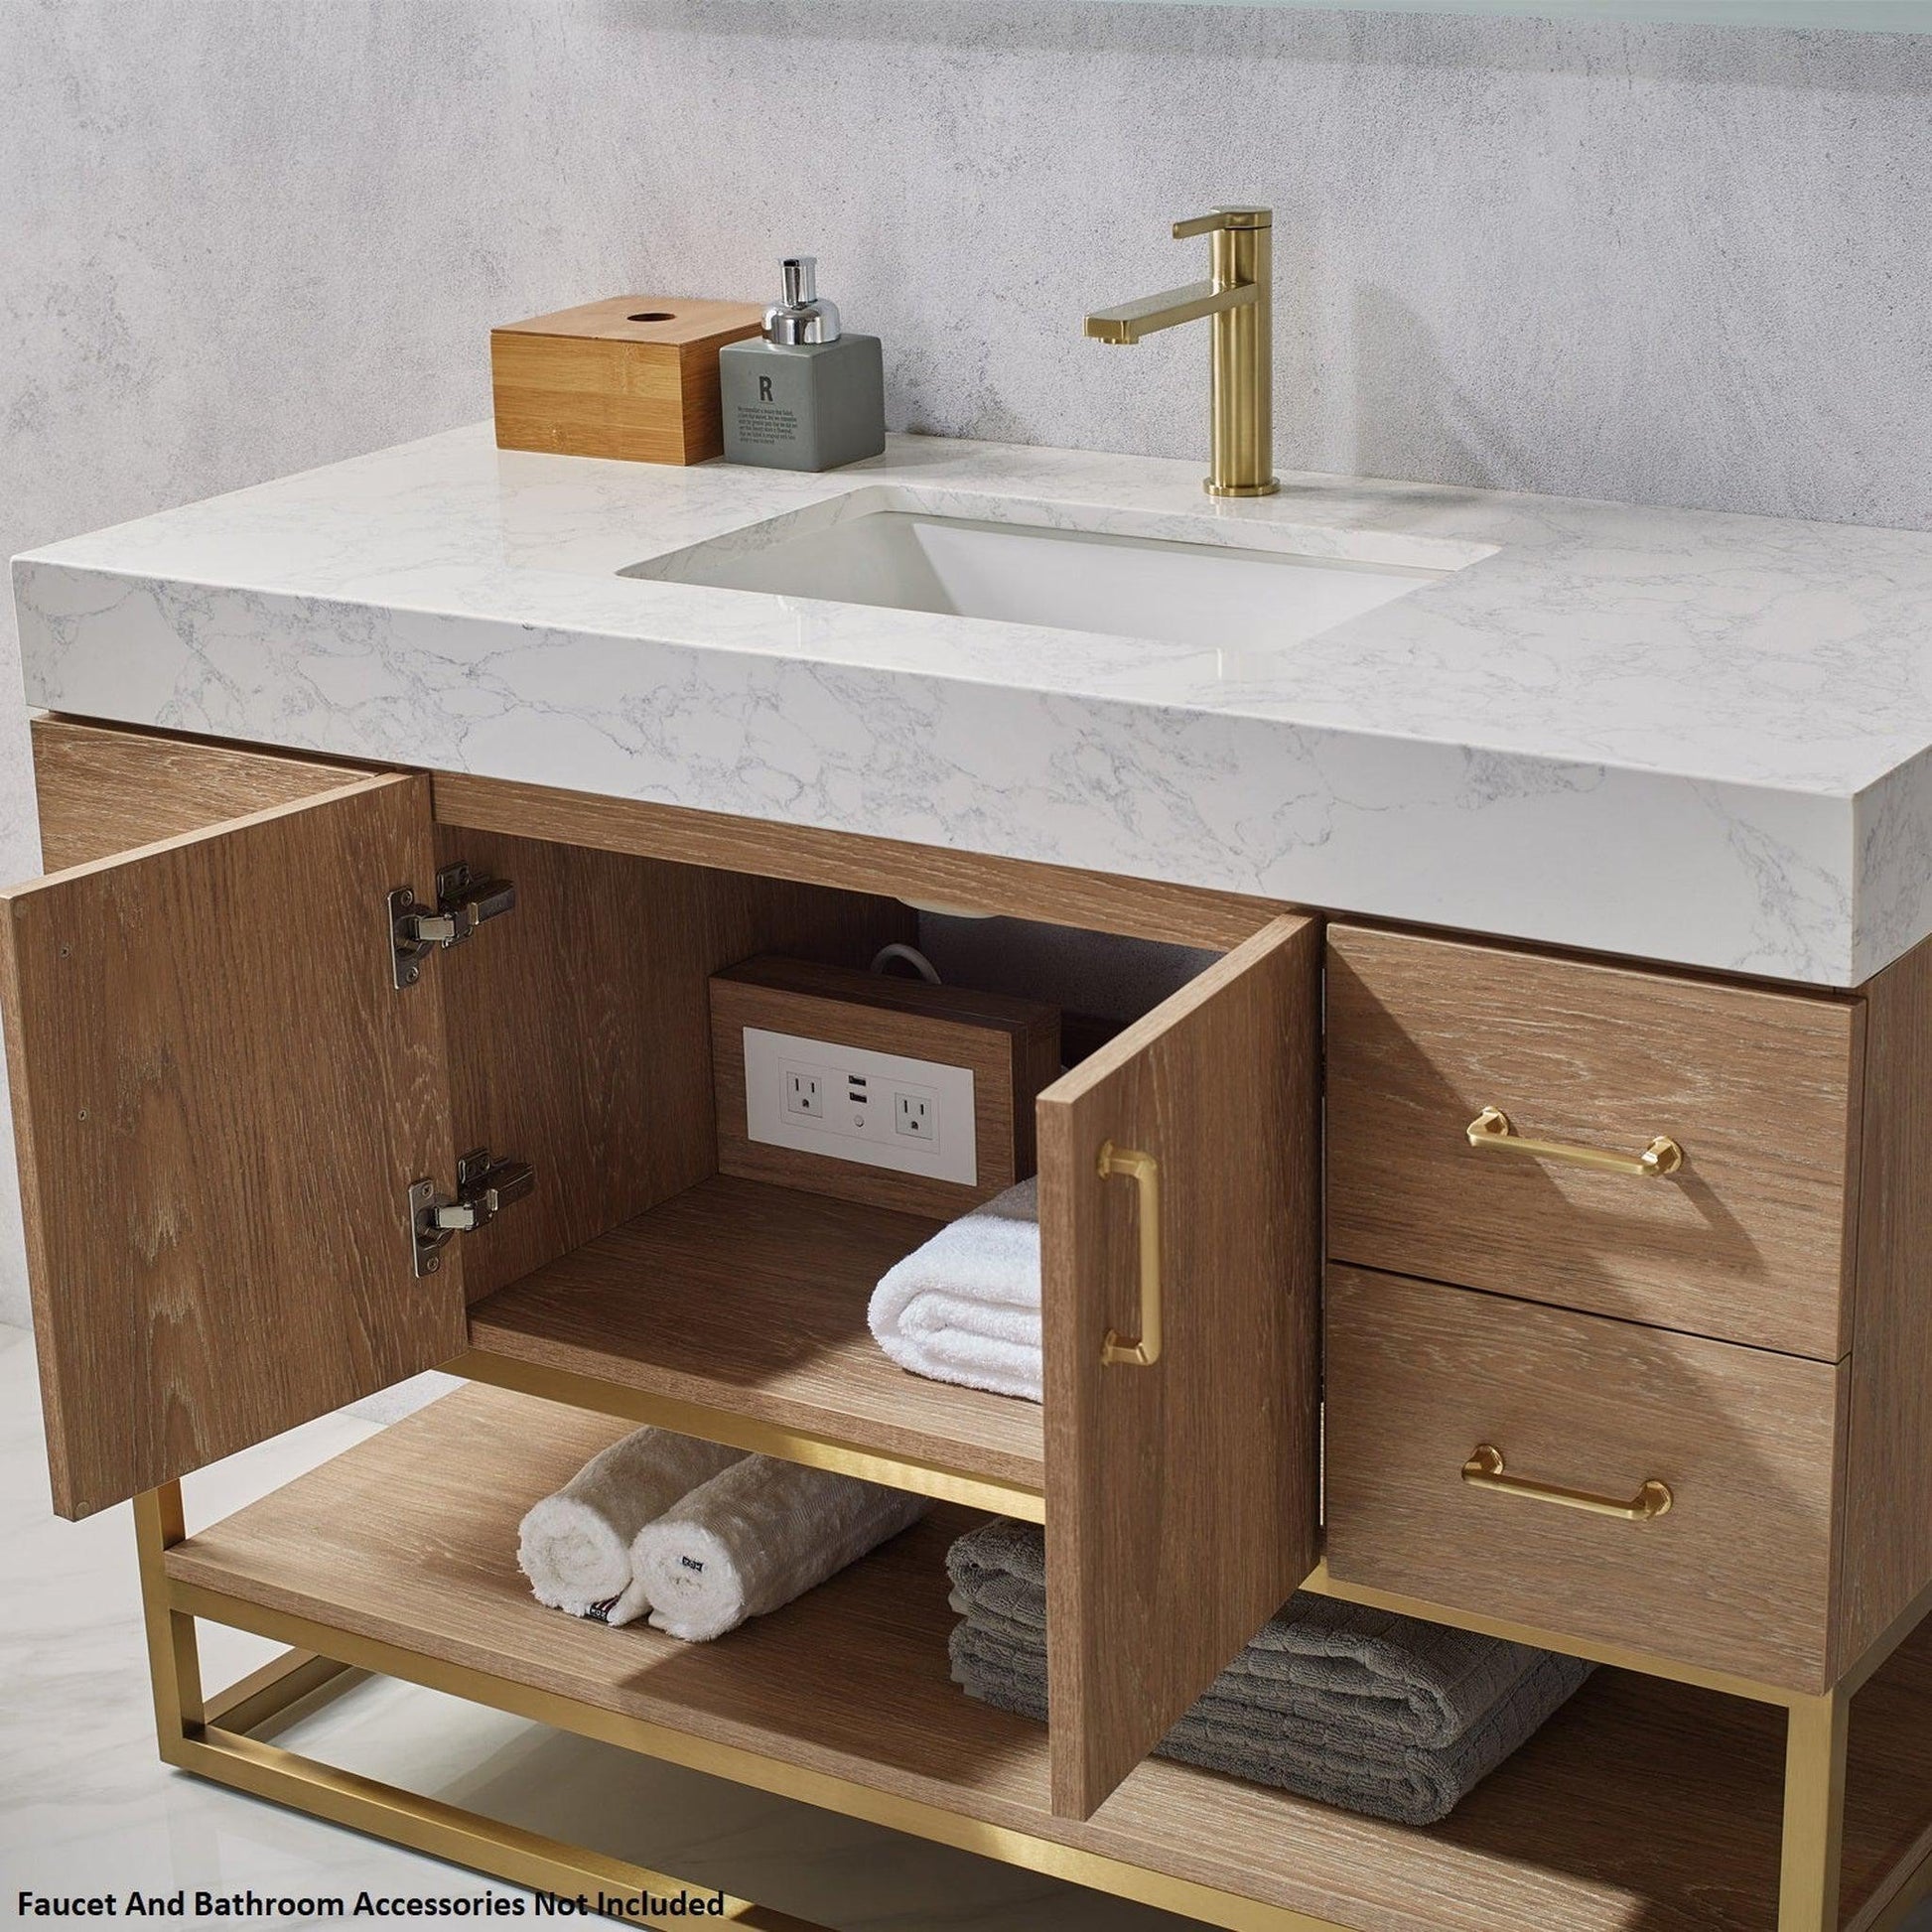 Viking® Stainless Steel Sink Base Cabinet